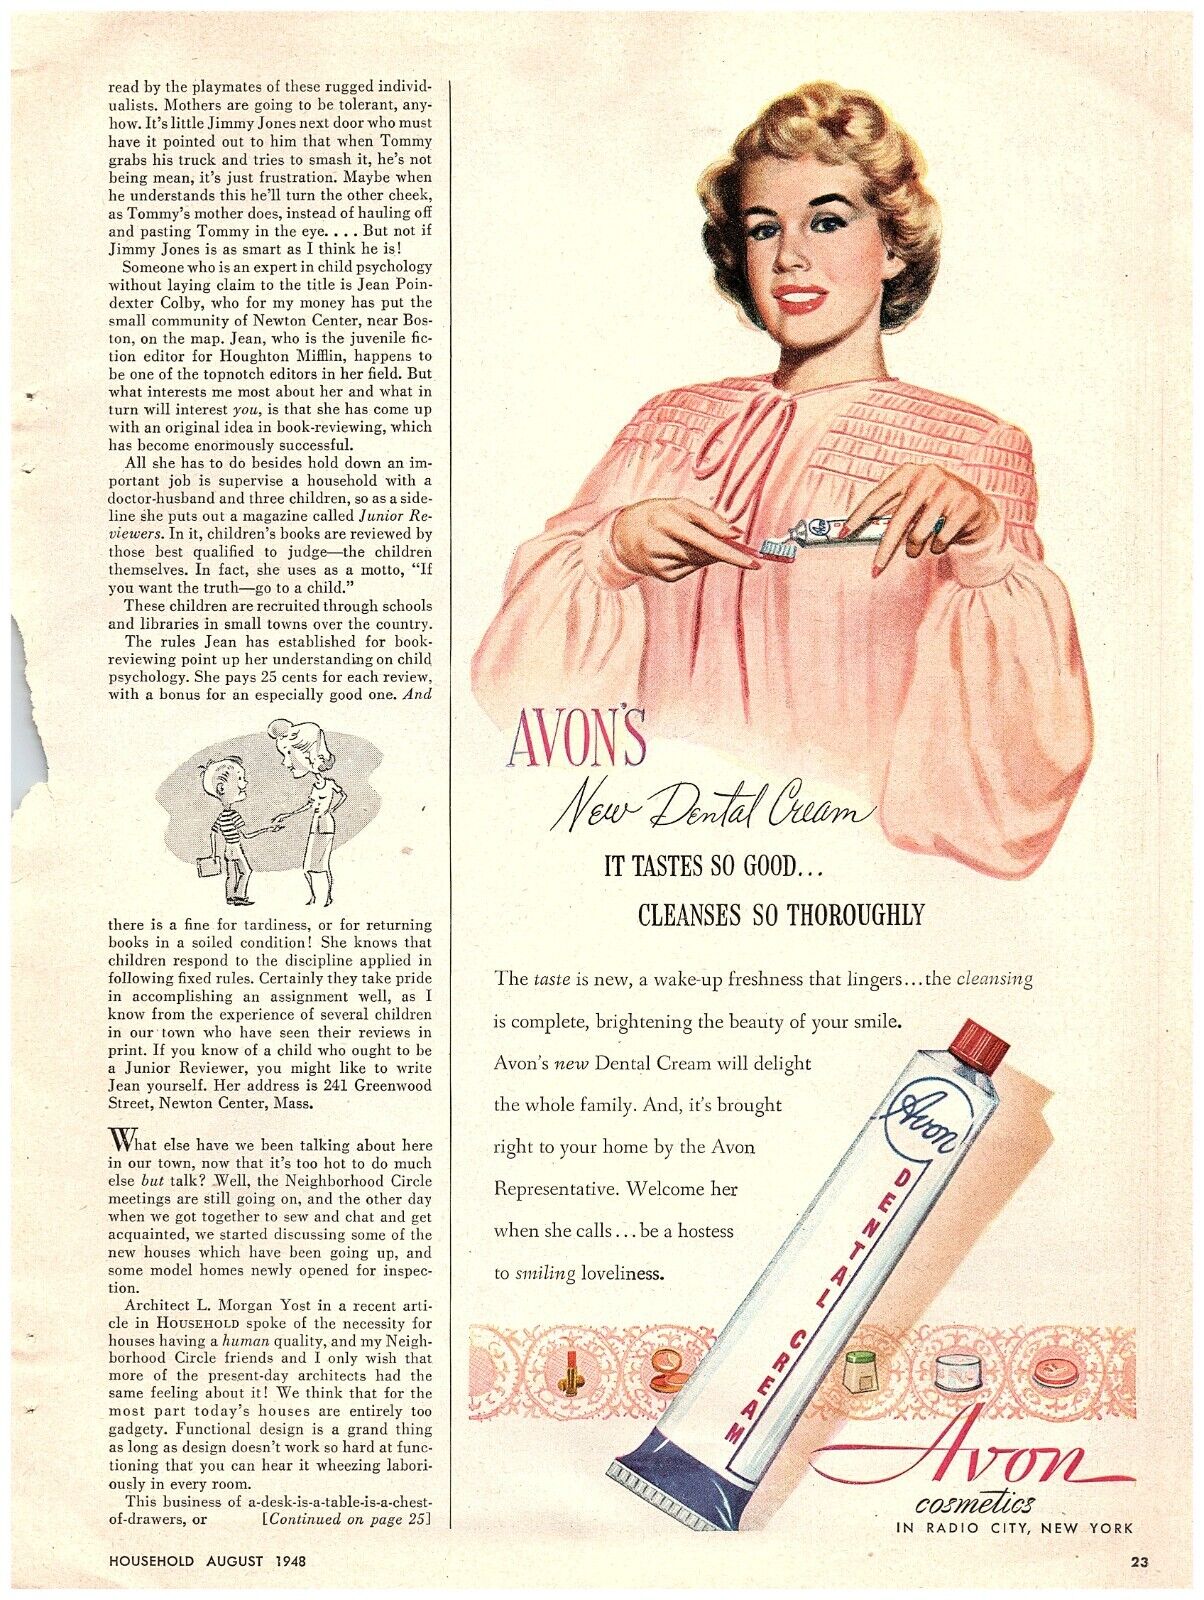 1948 Avon\'s New Dental Cream Print Ad, Avon Cosmetics, Radio City New York